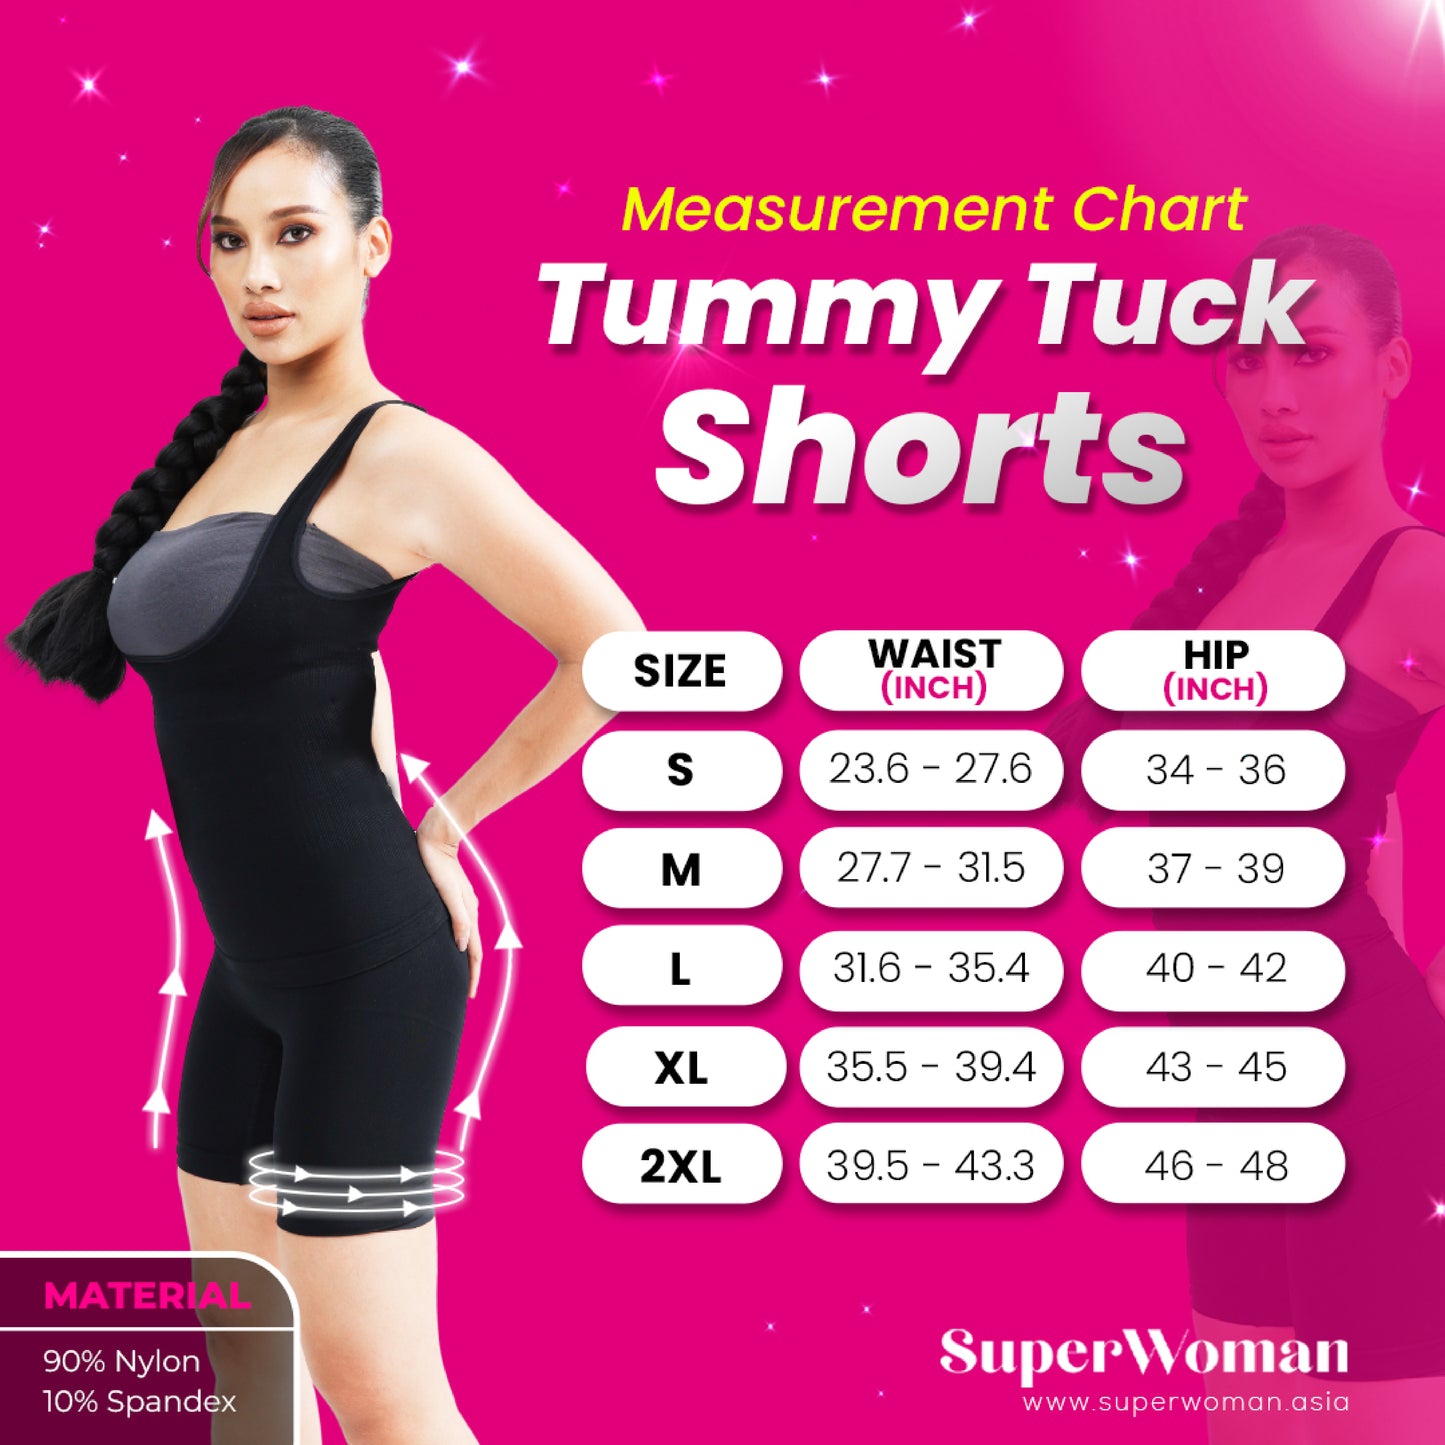 SuperWoman Tummy Tuck